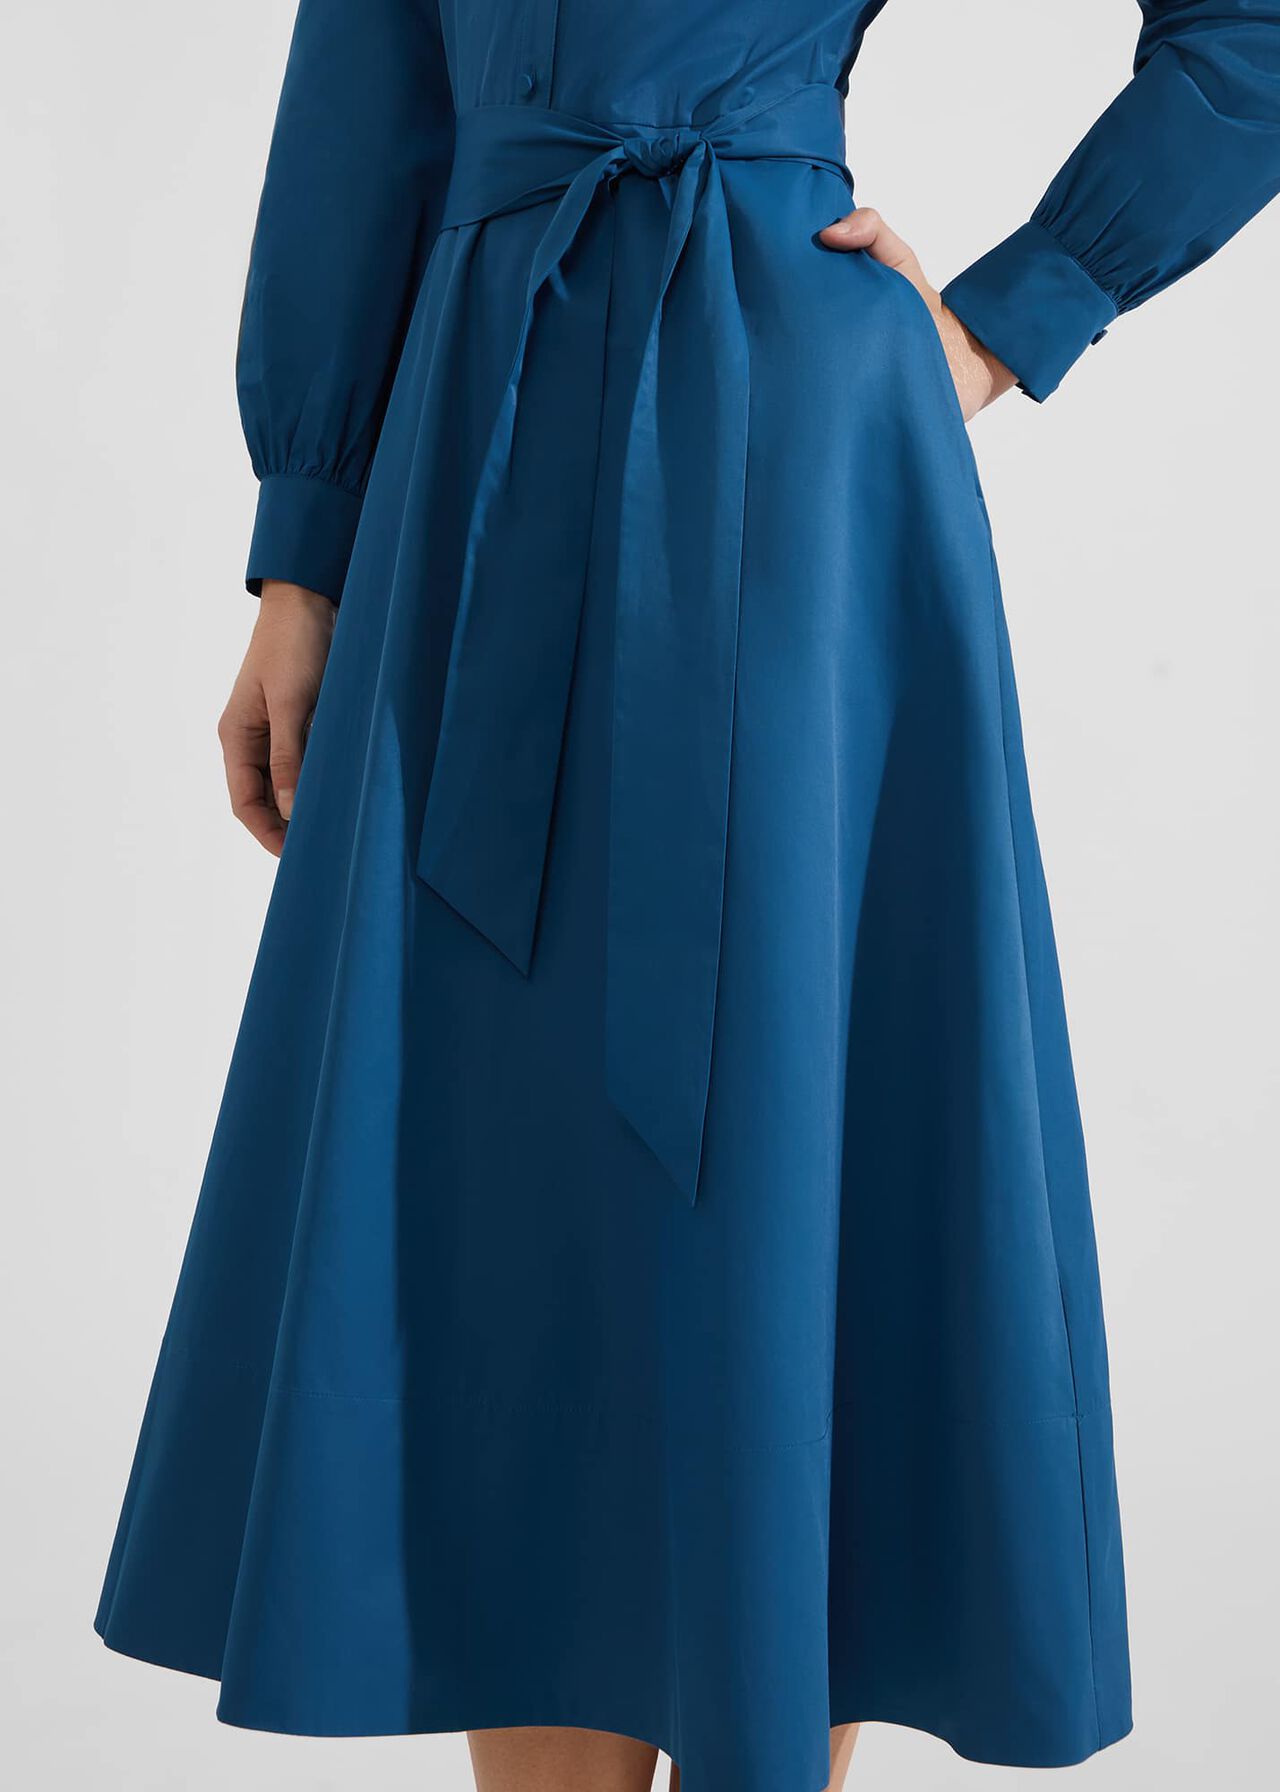 Petite Ivana Dress, Lyons Blue, hi-res